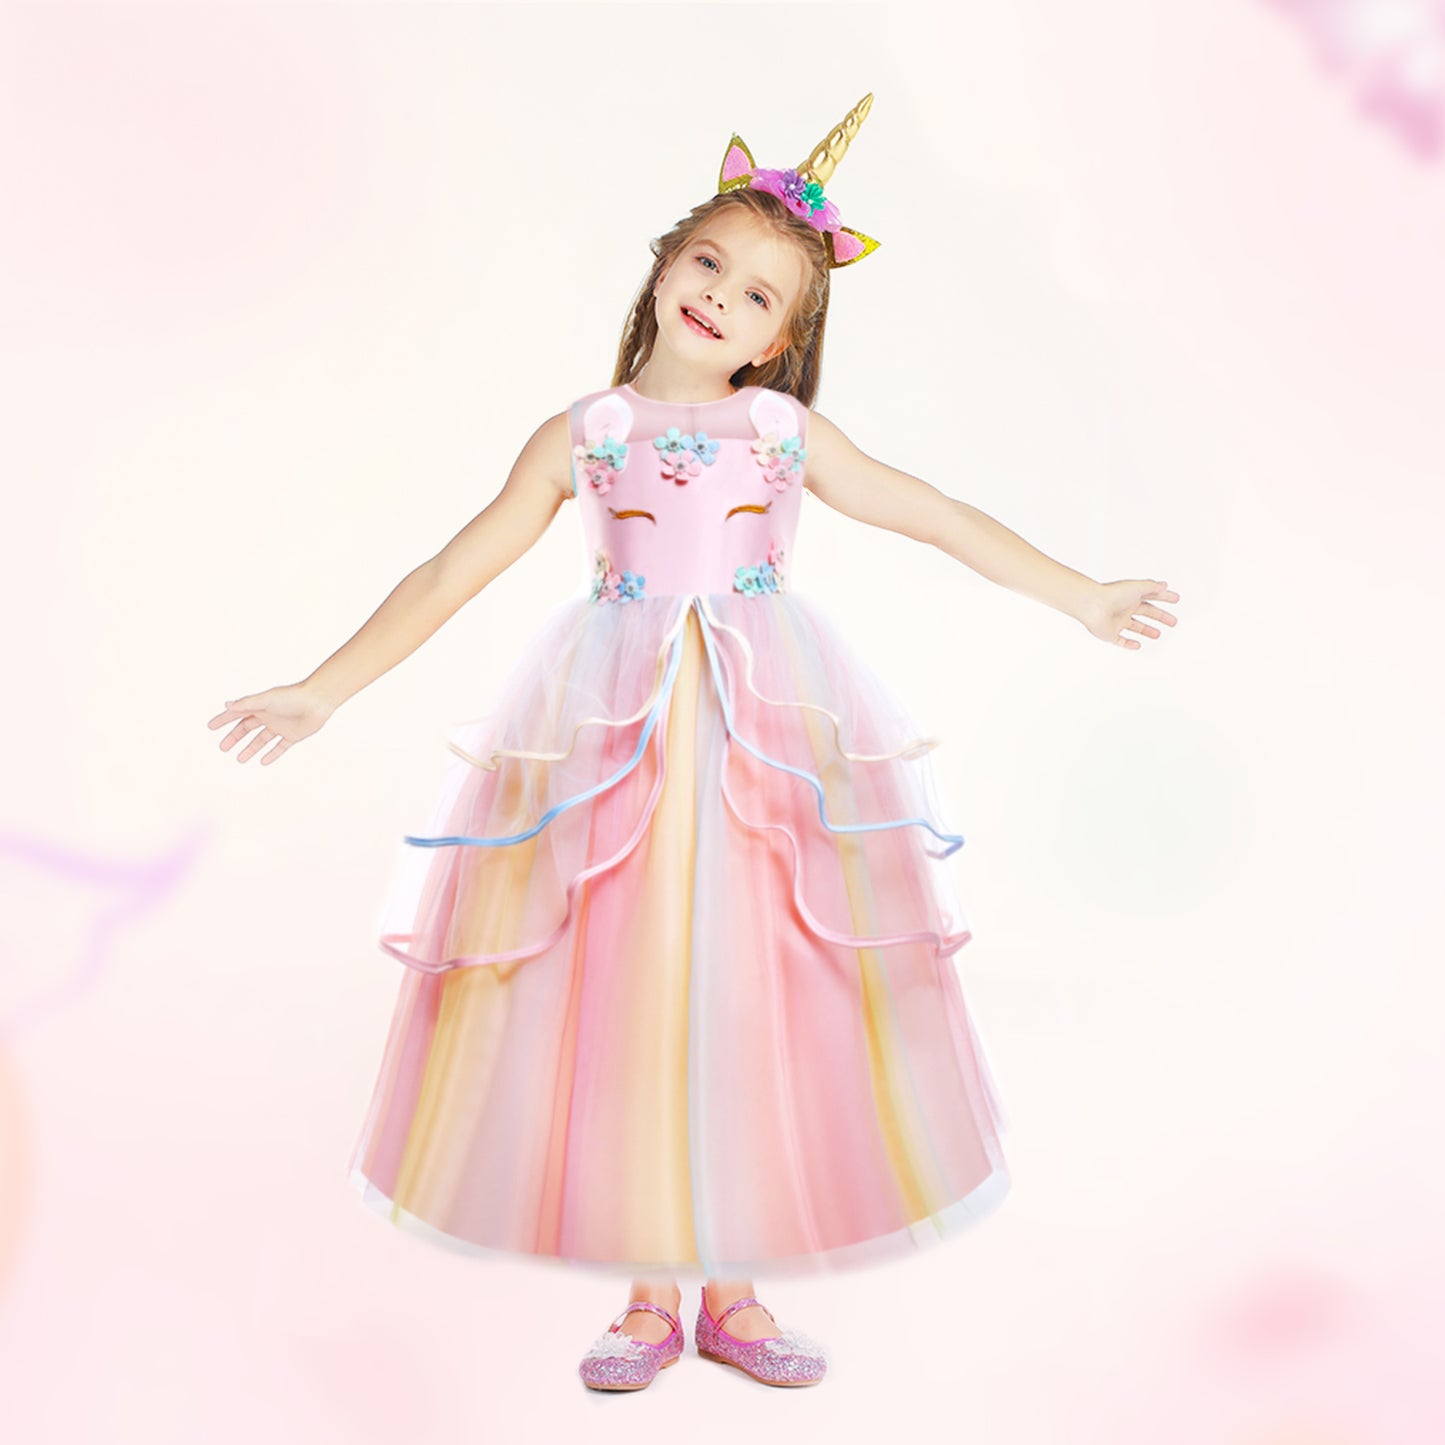 Foierp Child Long Evening Dress - Princess Dress Rainbow Pink for 3-12 Years Old